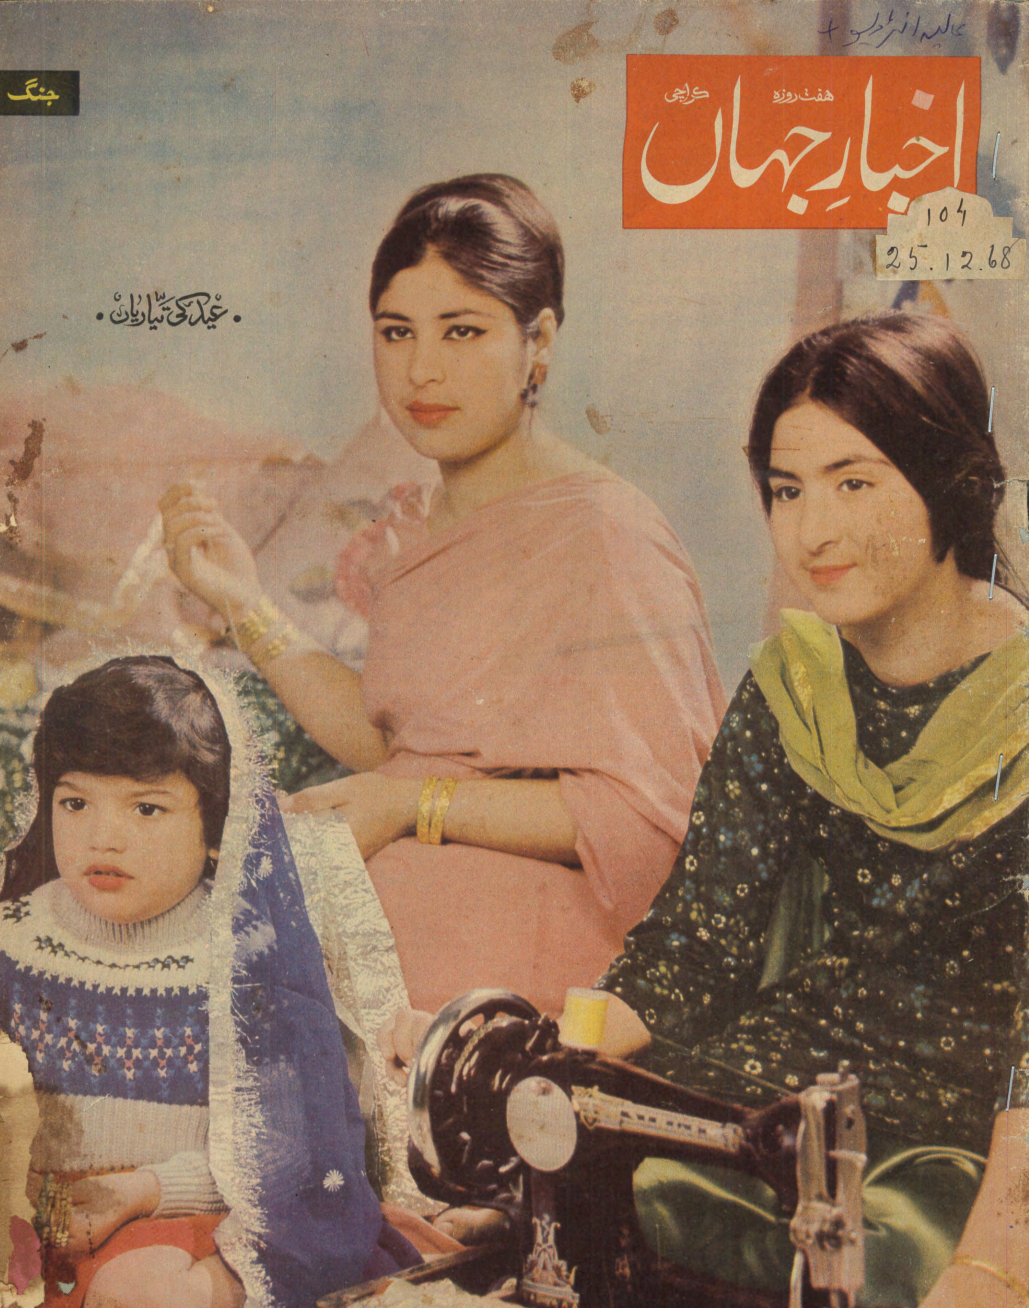 Akhbar-e-Jahan (Dec 25, 1968)